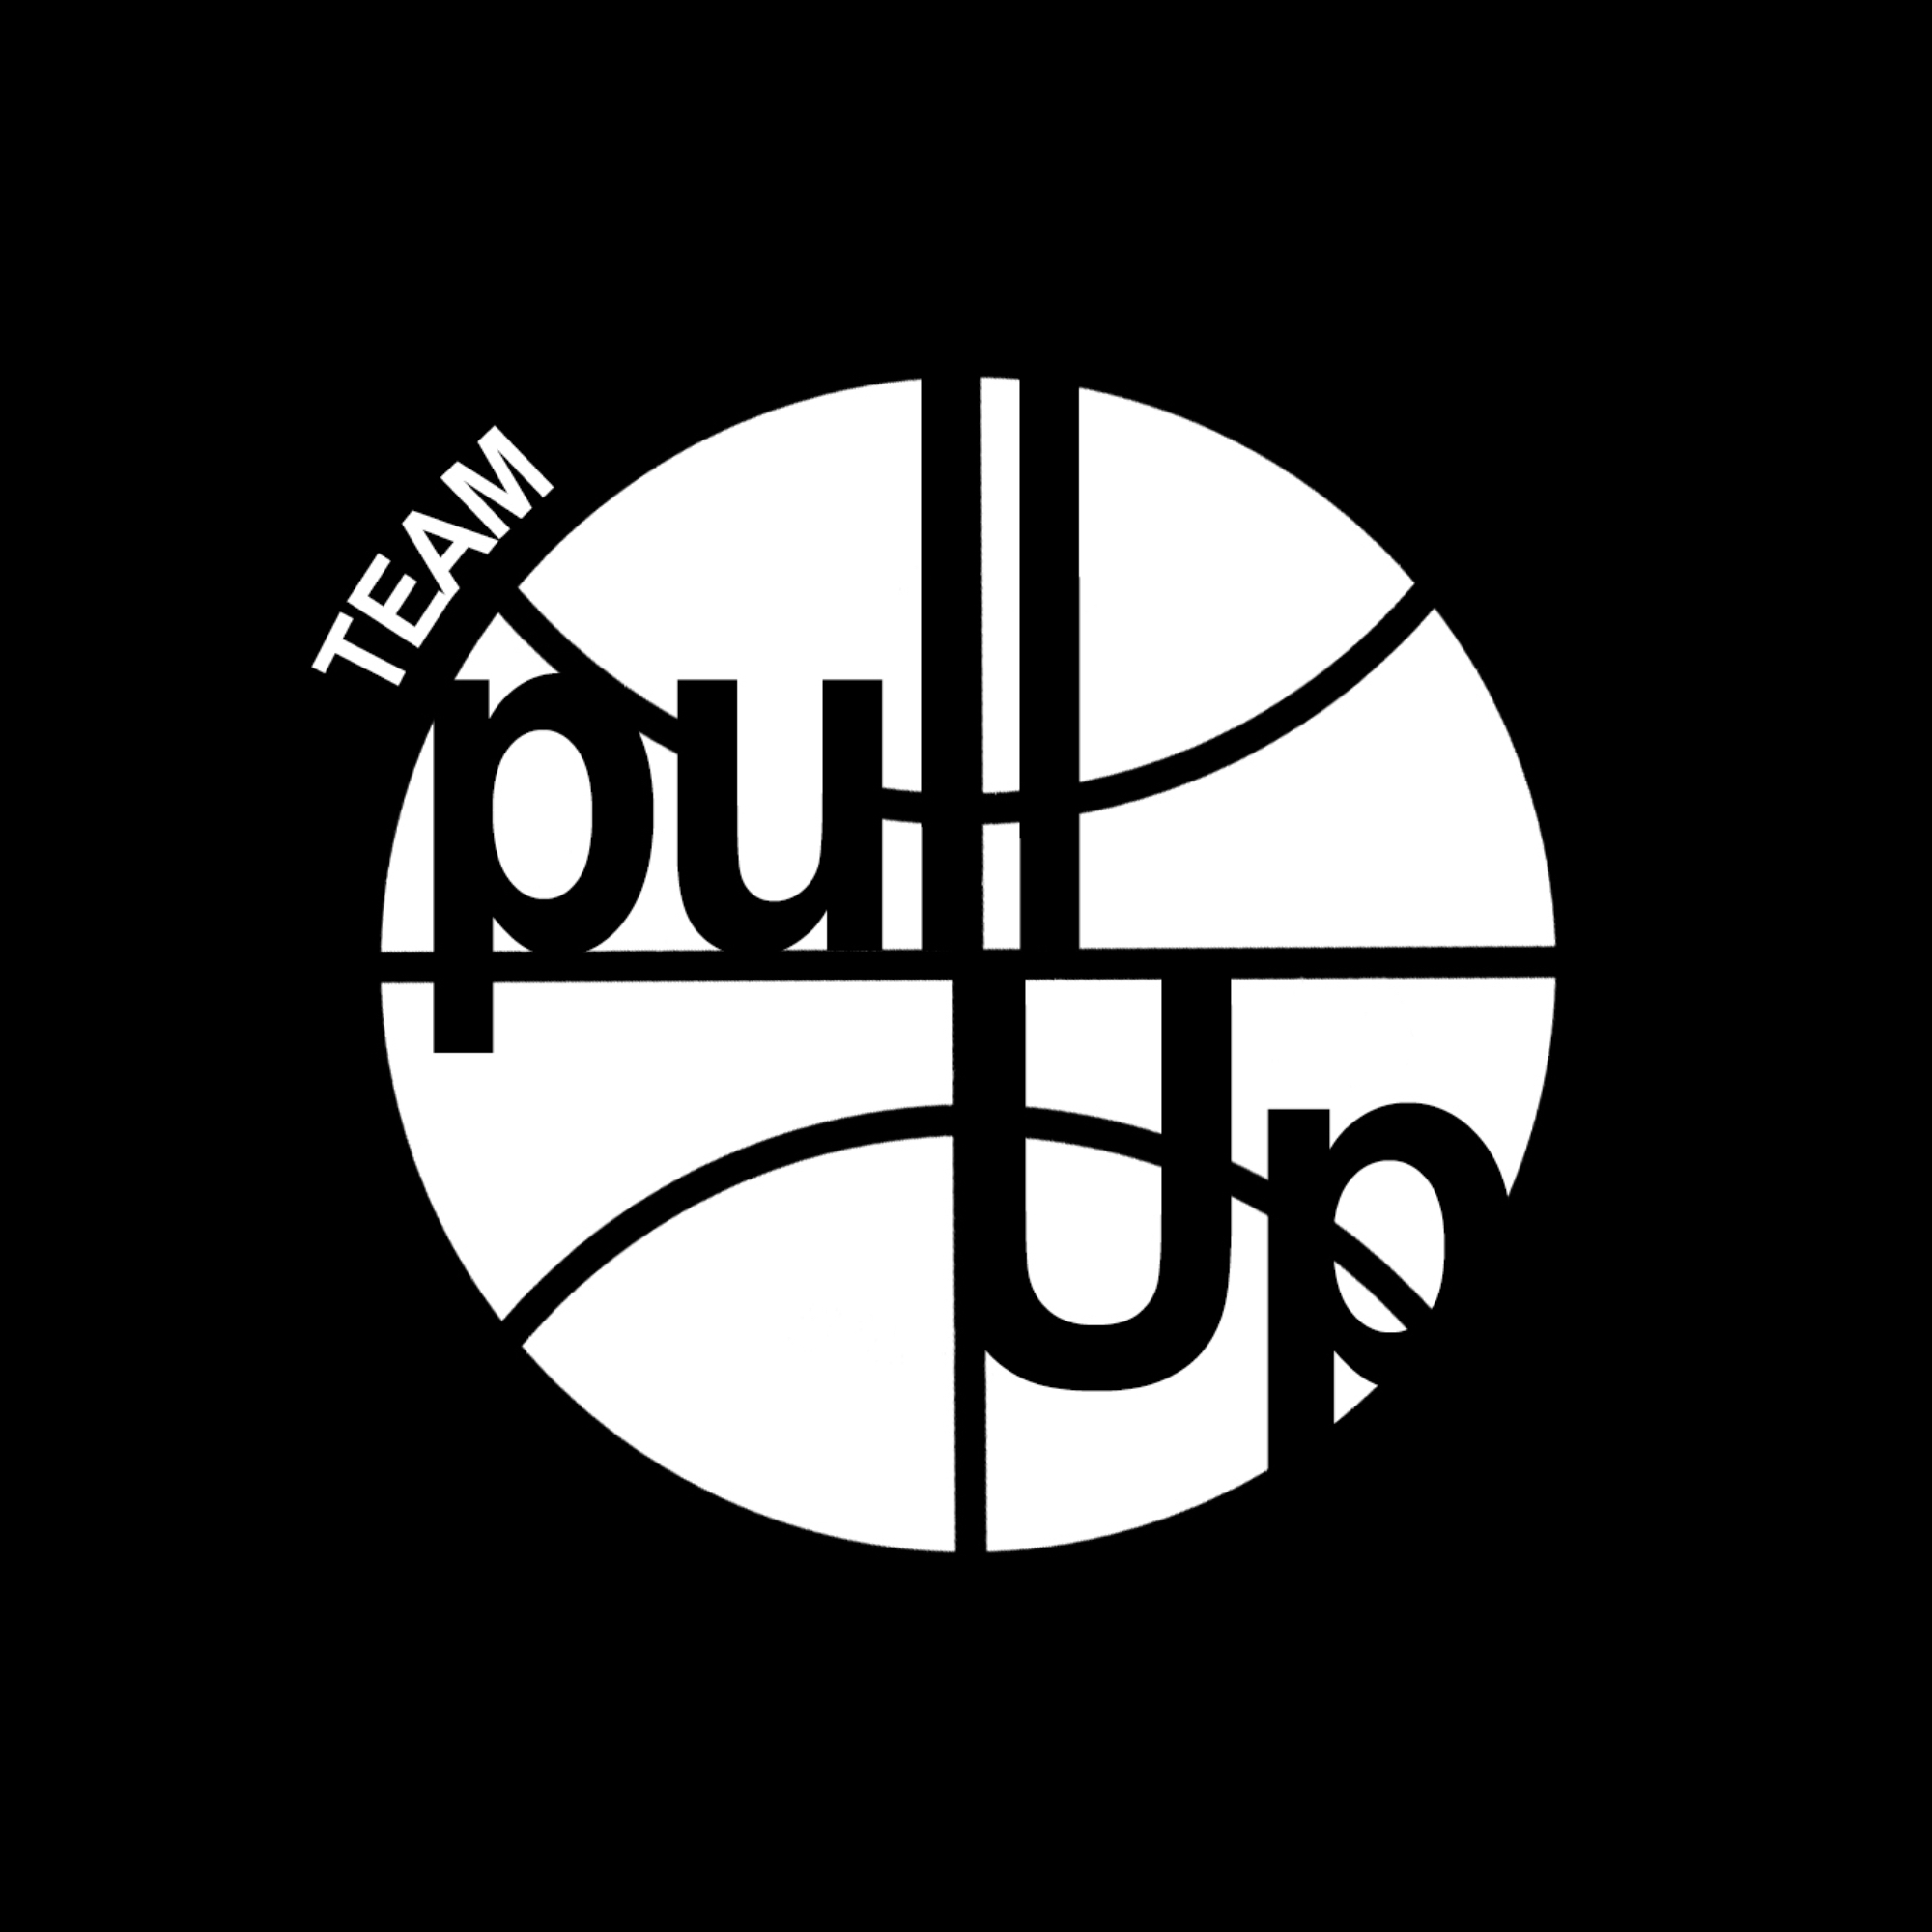 Organization logo for Team Pull-Up